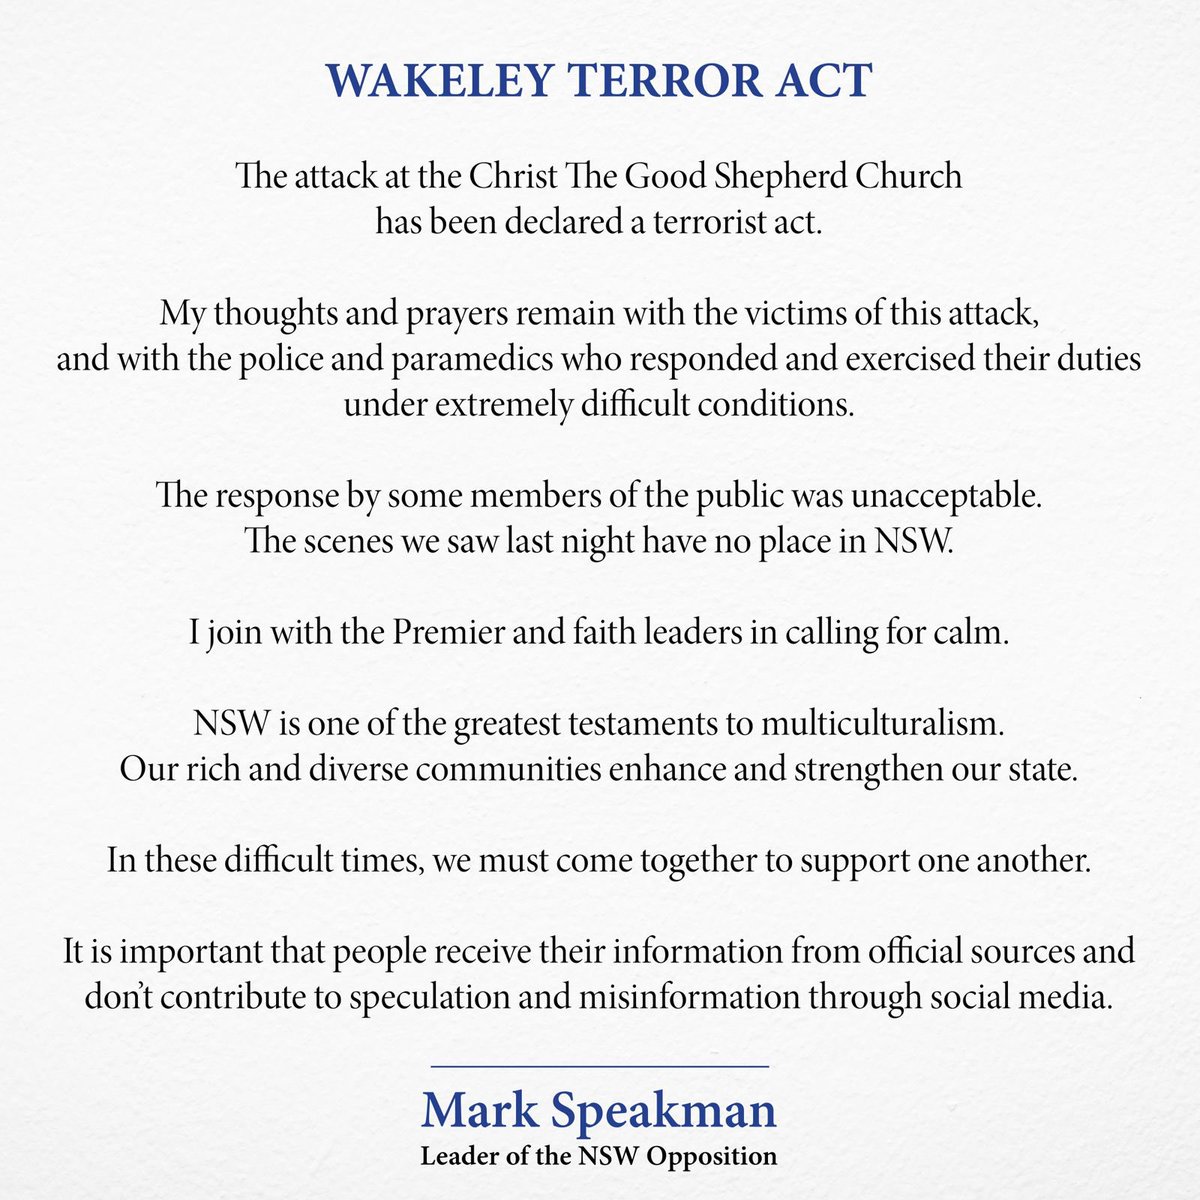 Statement on Wakeley terror act.